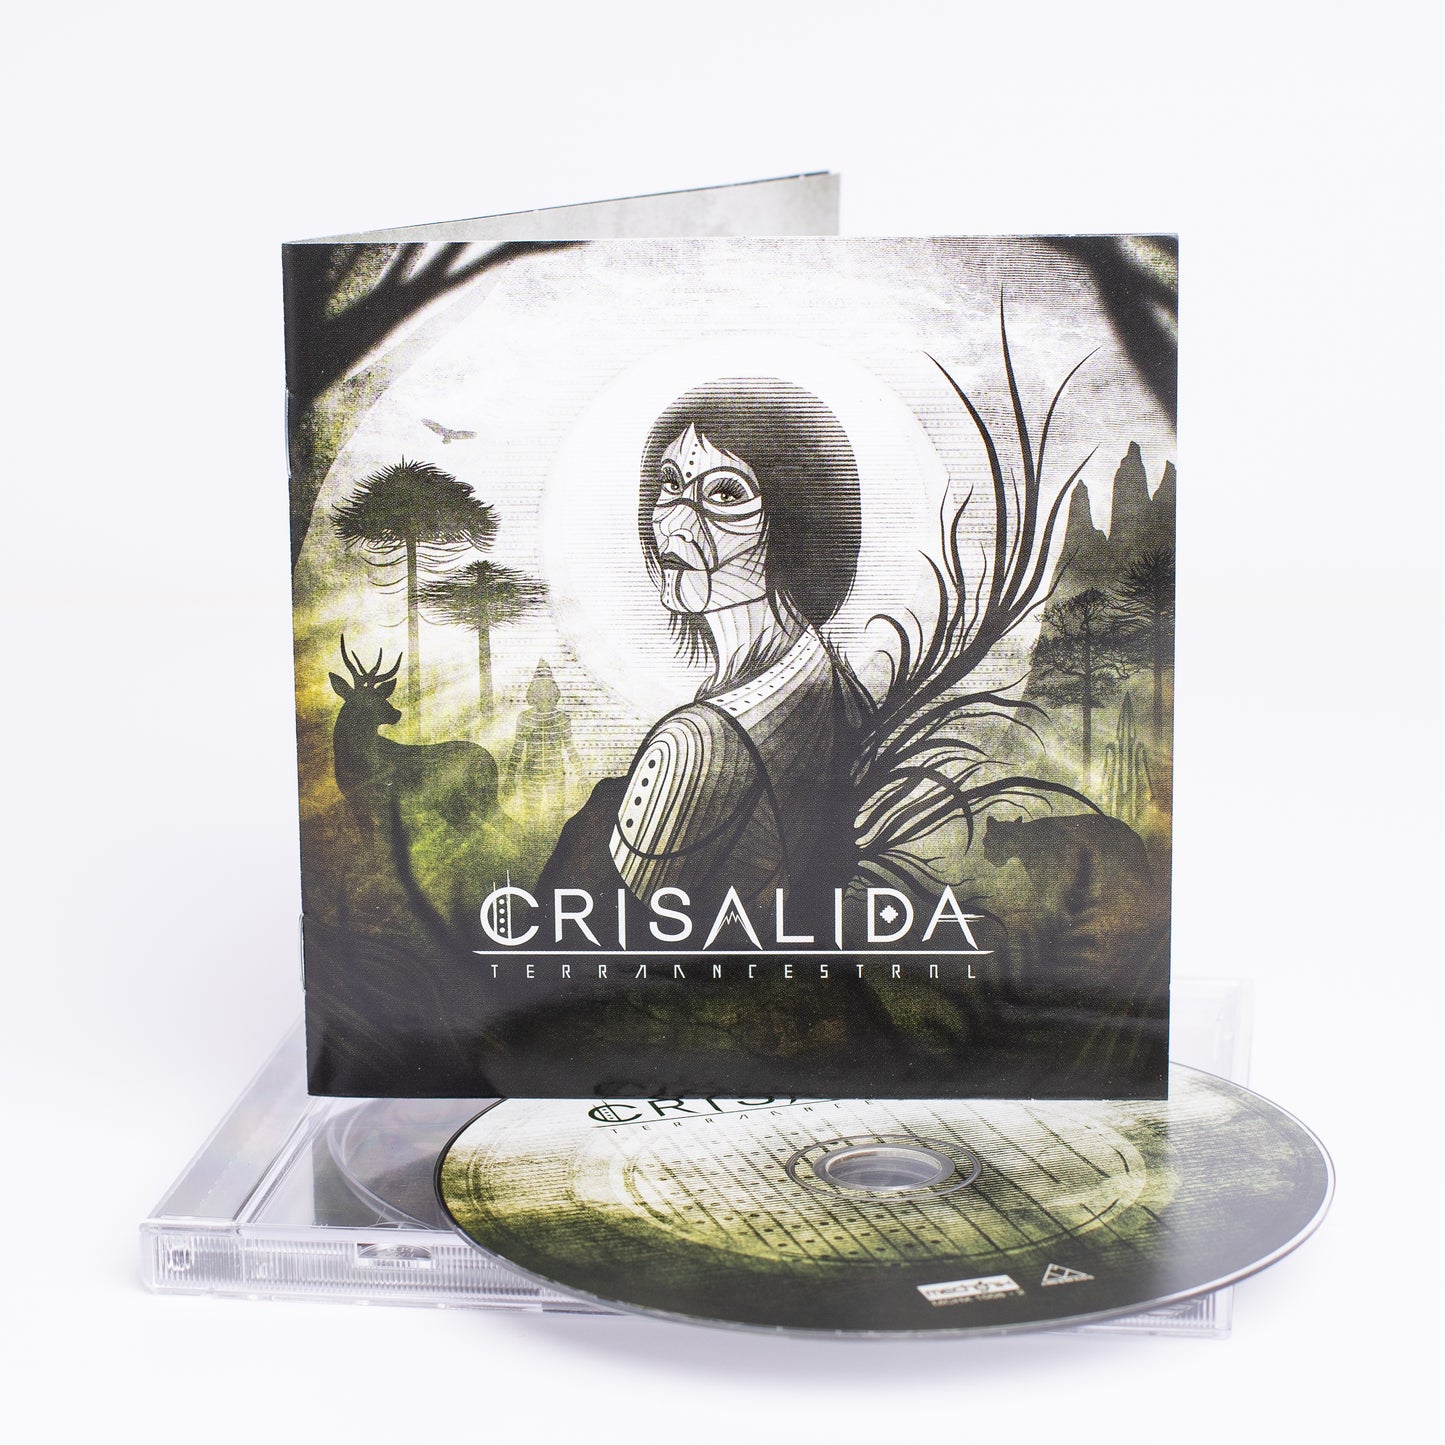 CRISALIDA - Terra Ancestral (Jewel case)